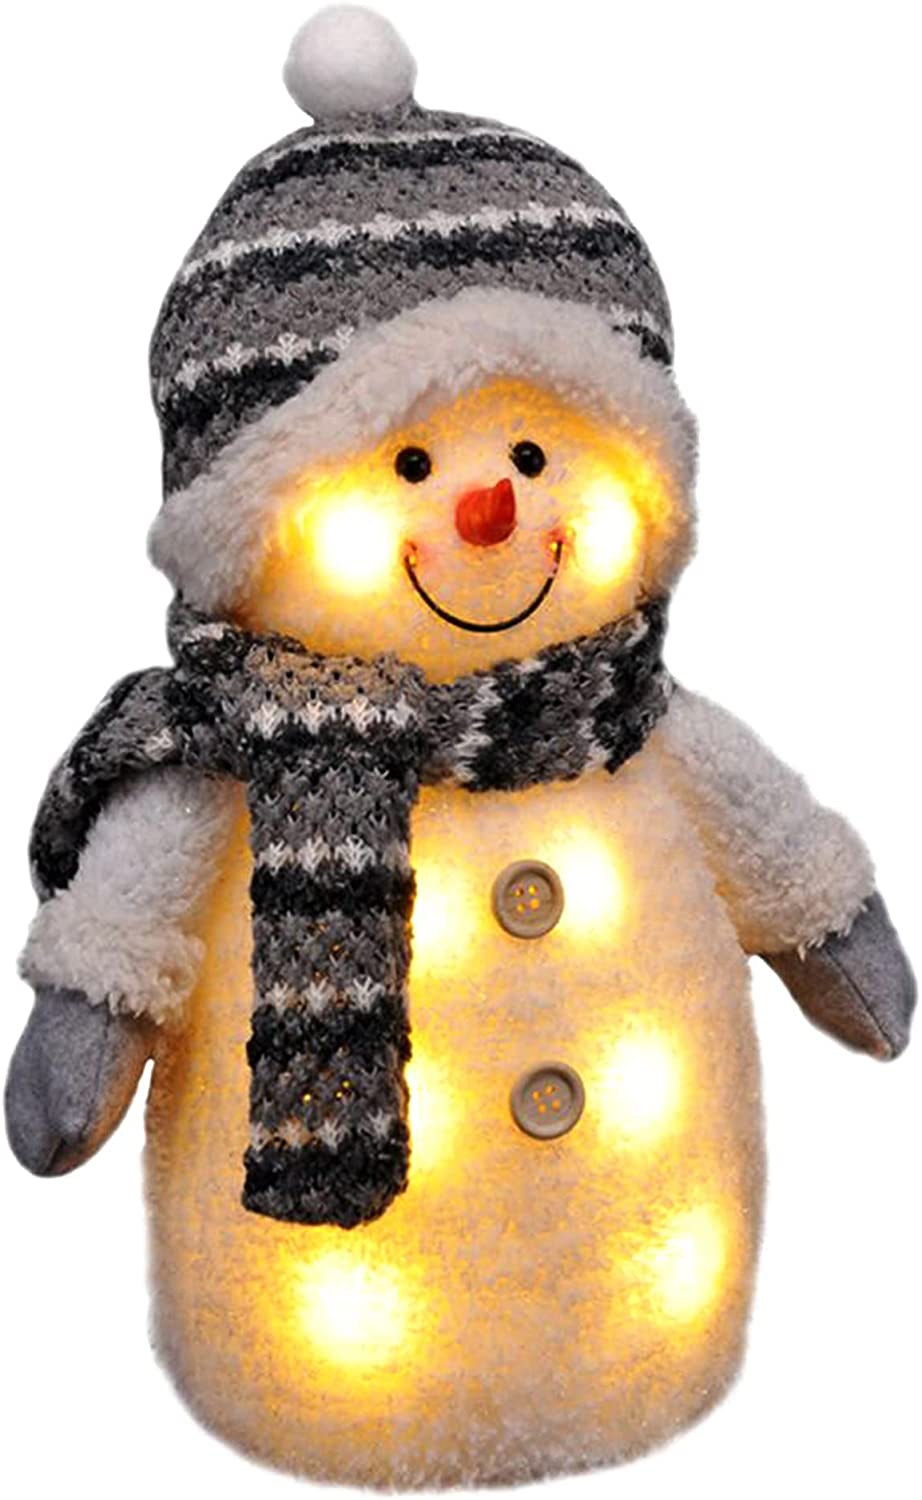 Gravidus Cute LED Decorative Snowman Illuminated Decorative Figurine with S